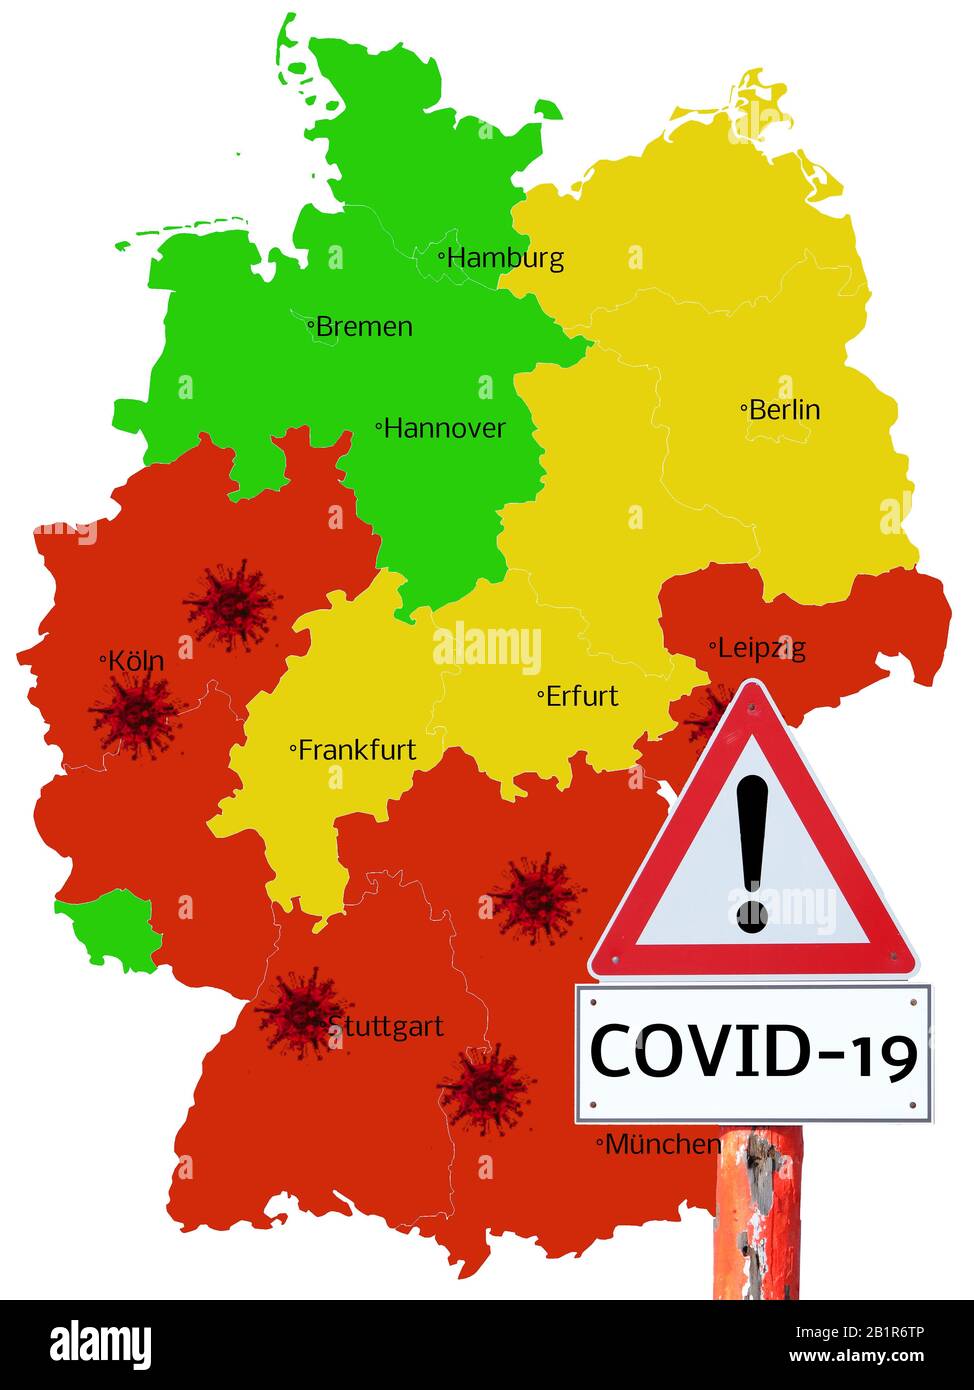 Warning sign Covid-19, Coronavirus map of Germany Stock Photo